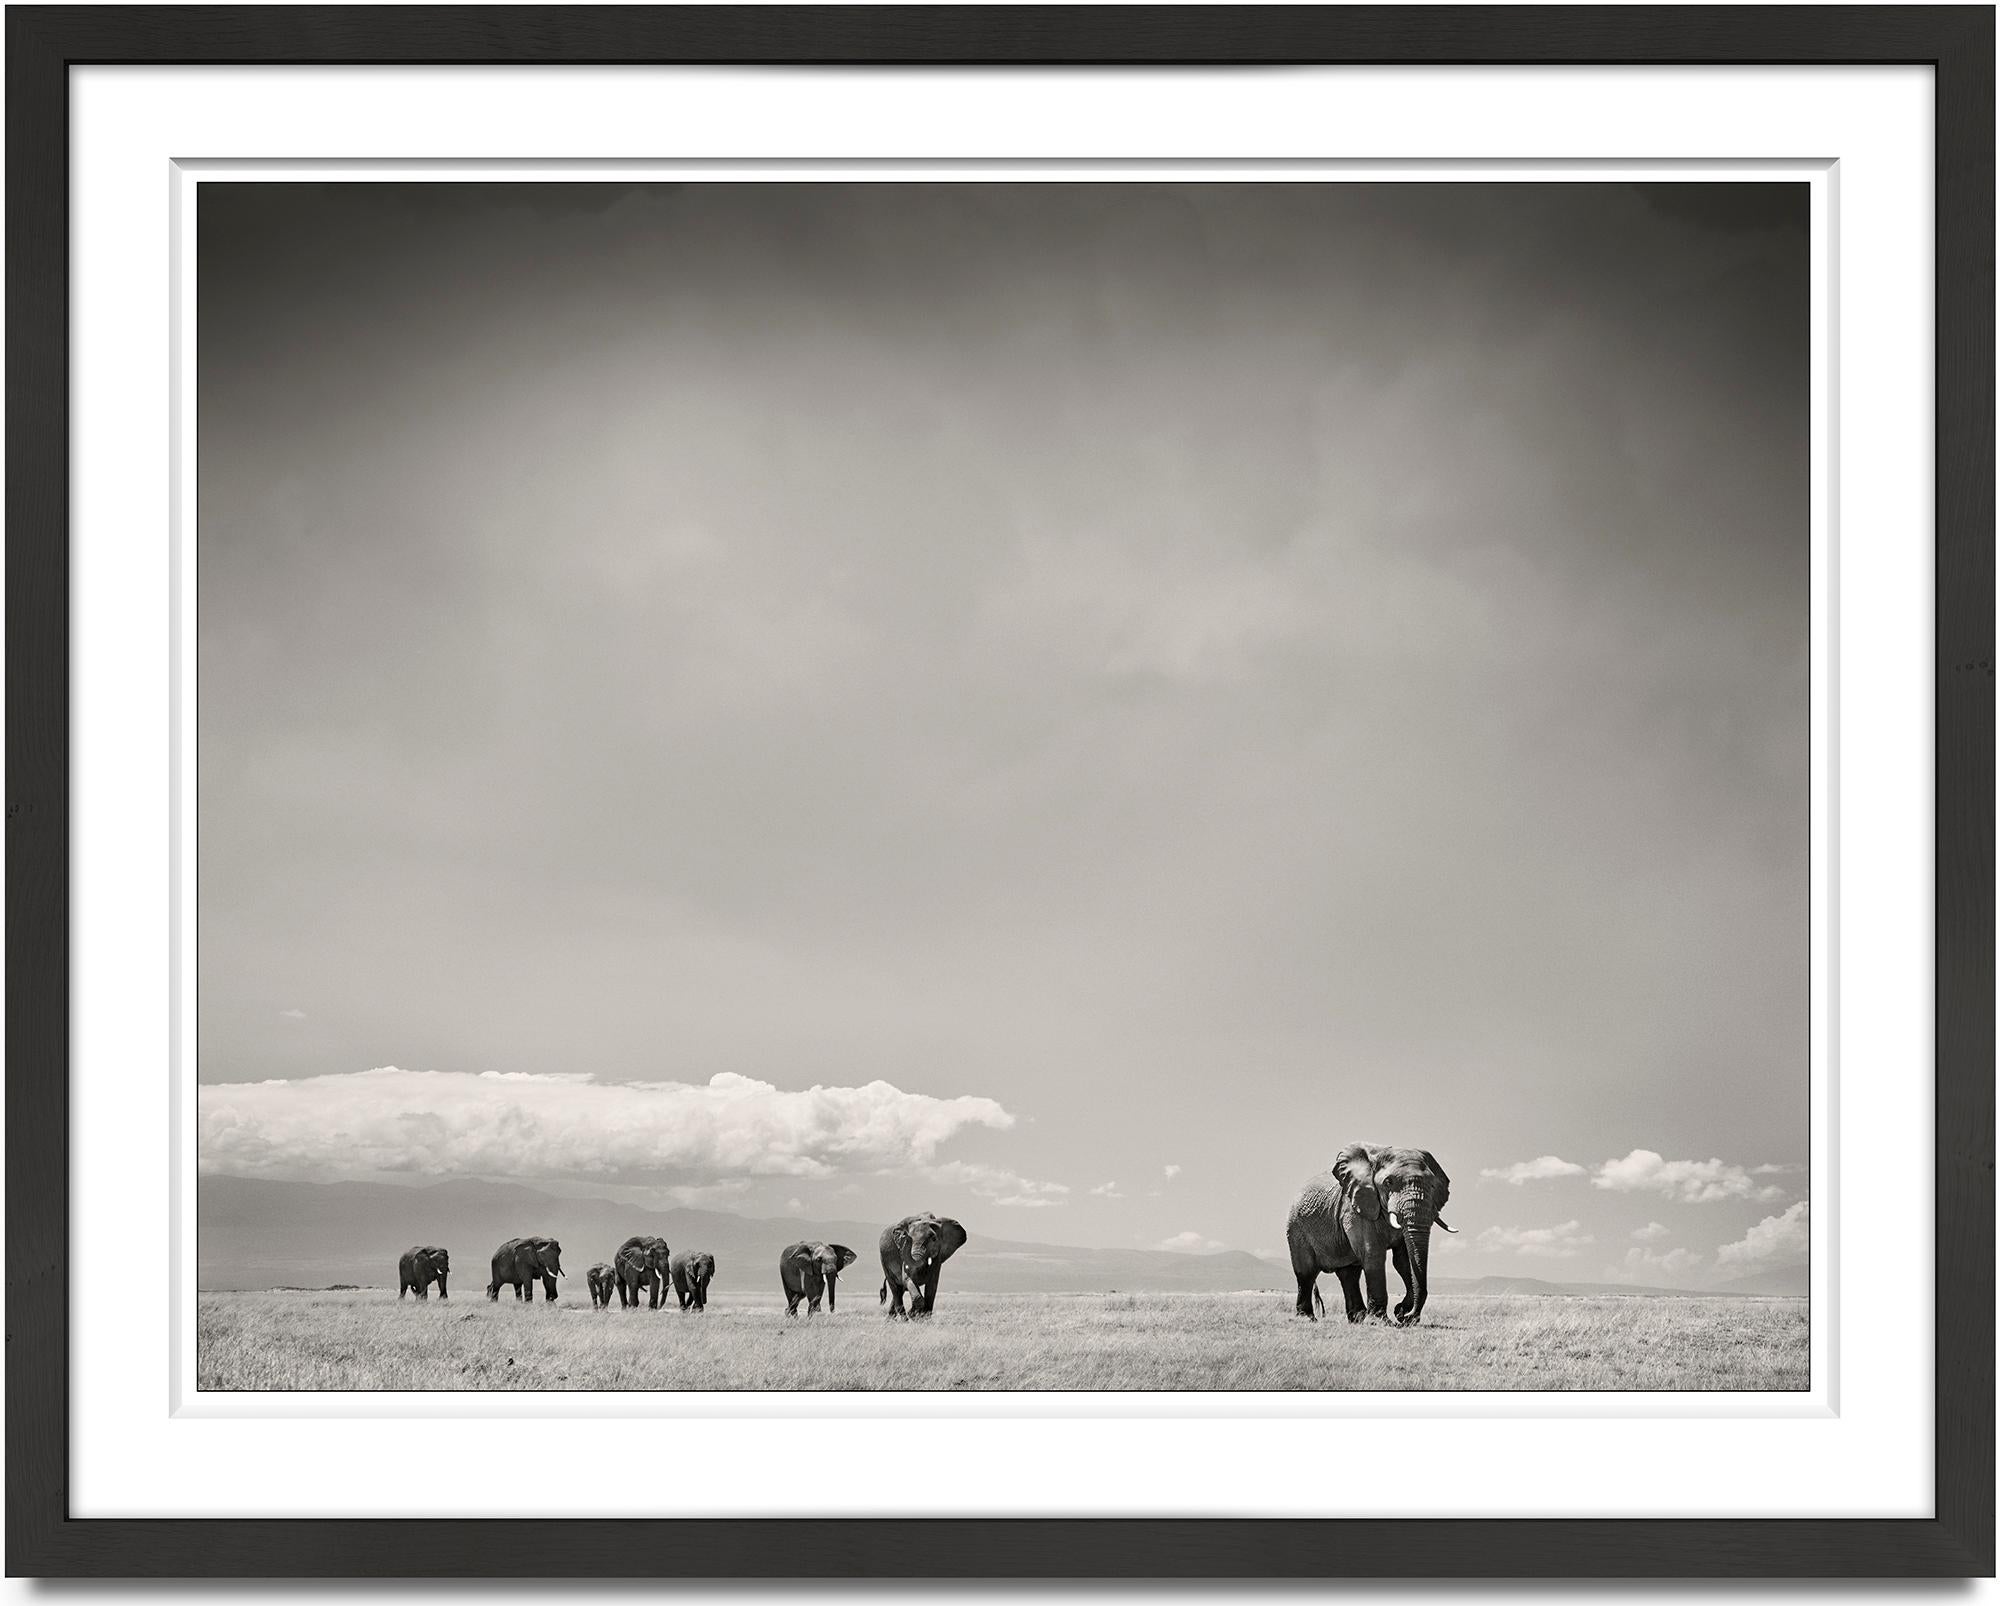 The Matriarch, Elephant, wildlife - Photograph by Joachim Schmeisser